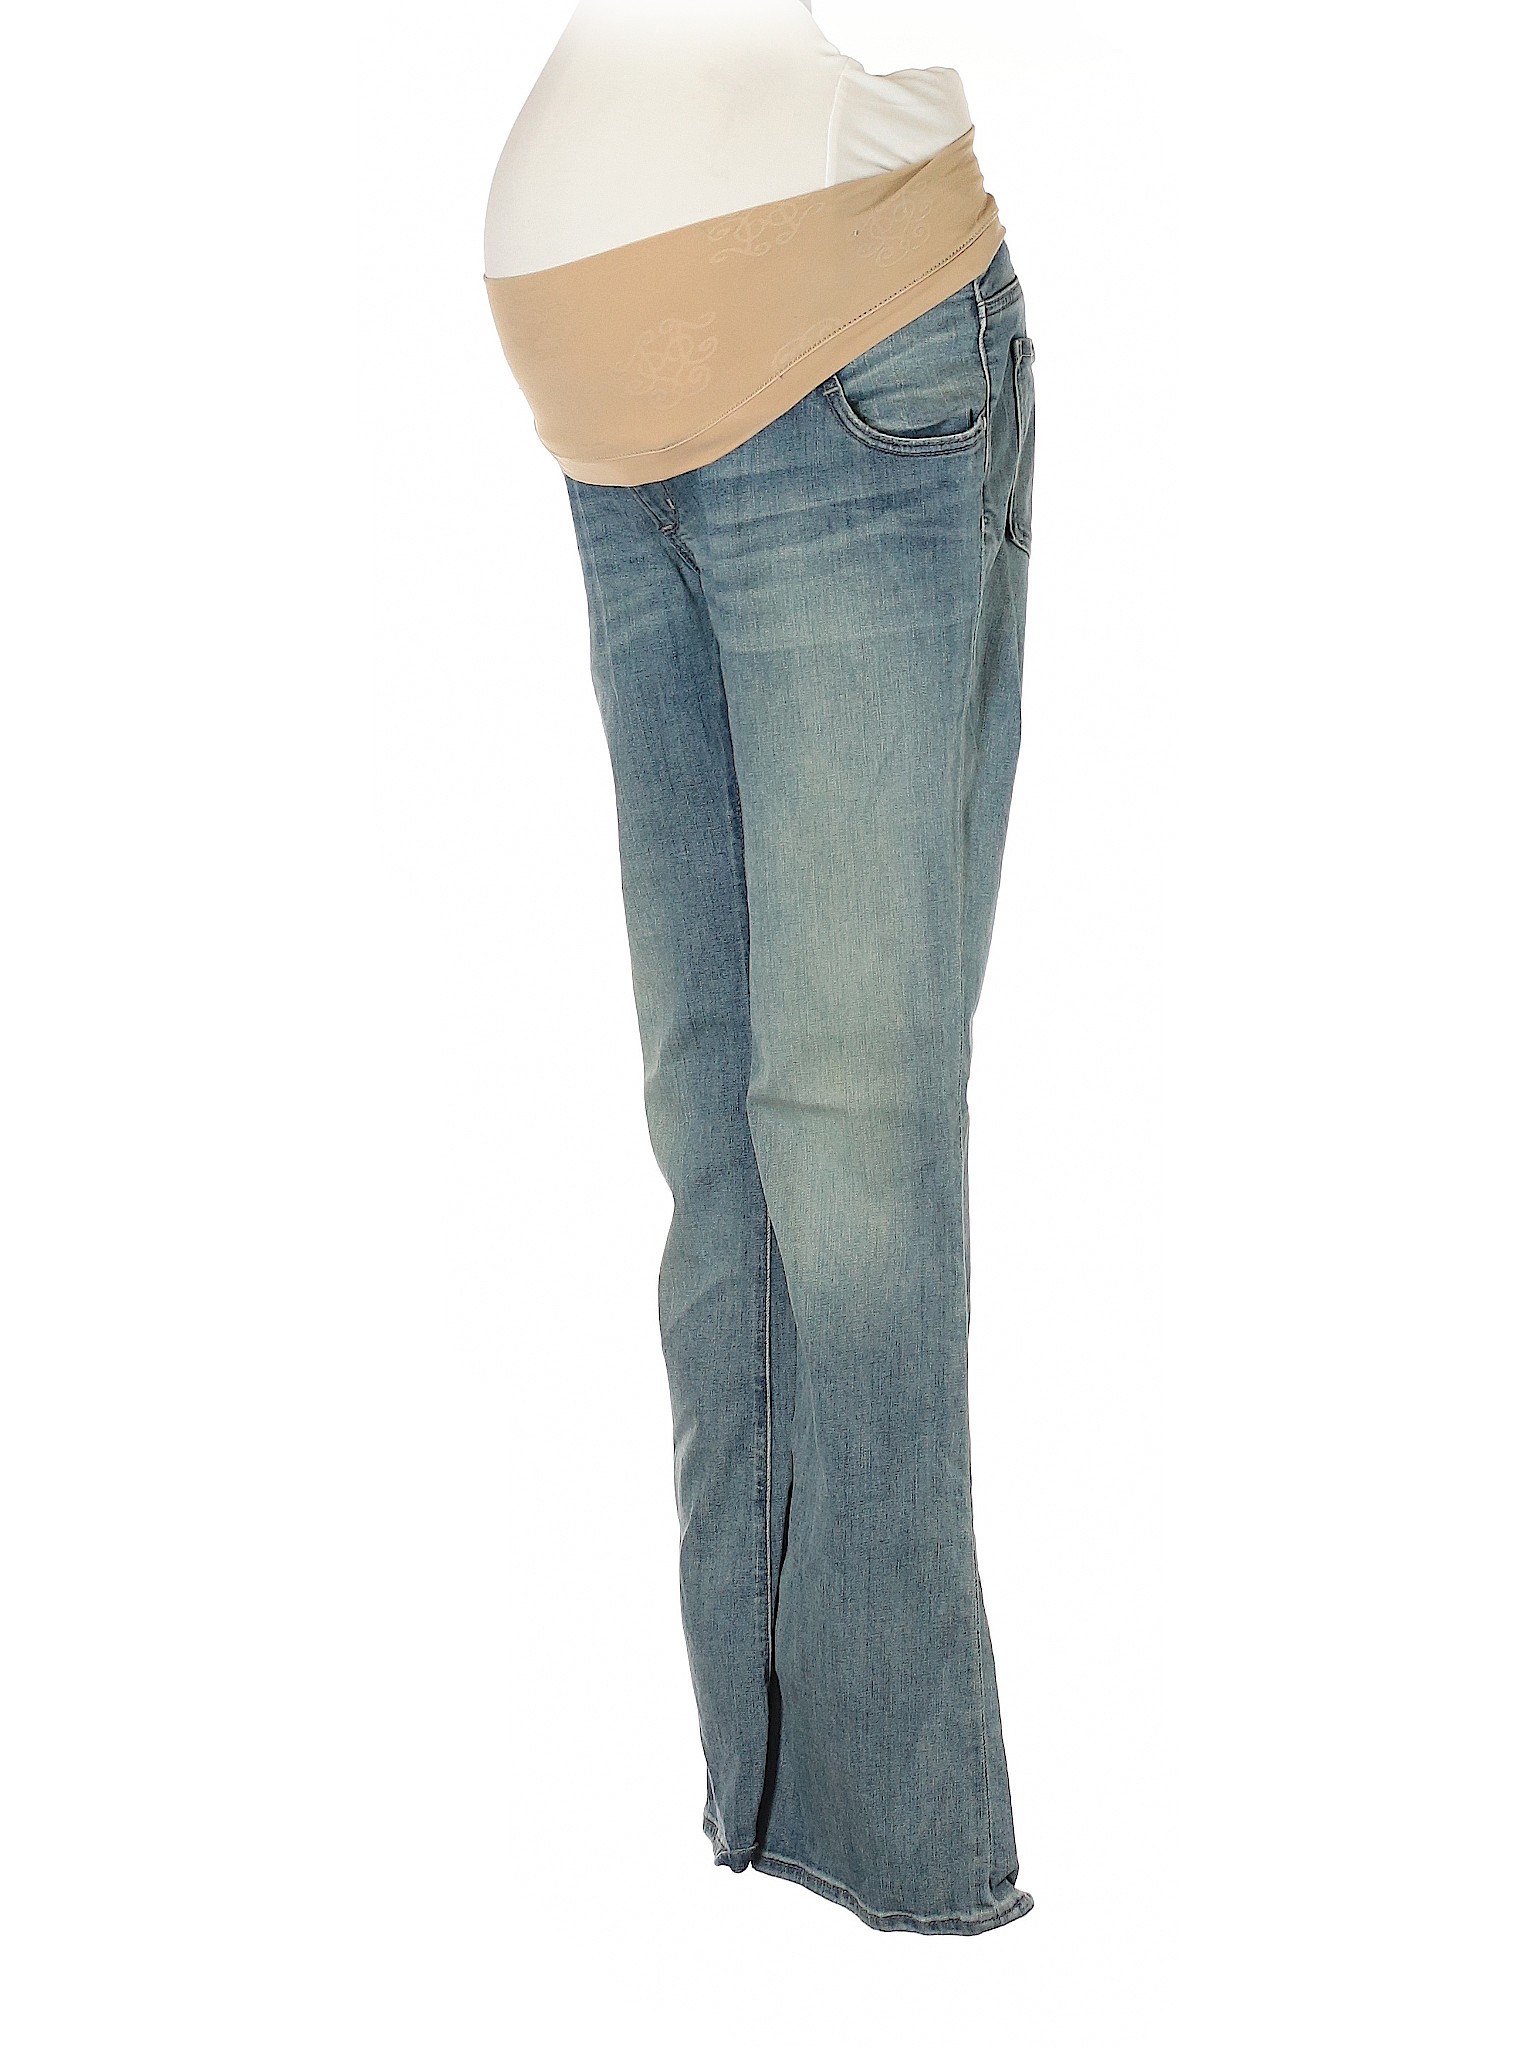 jessica simpson jeans size chart